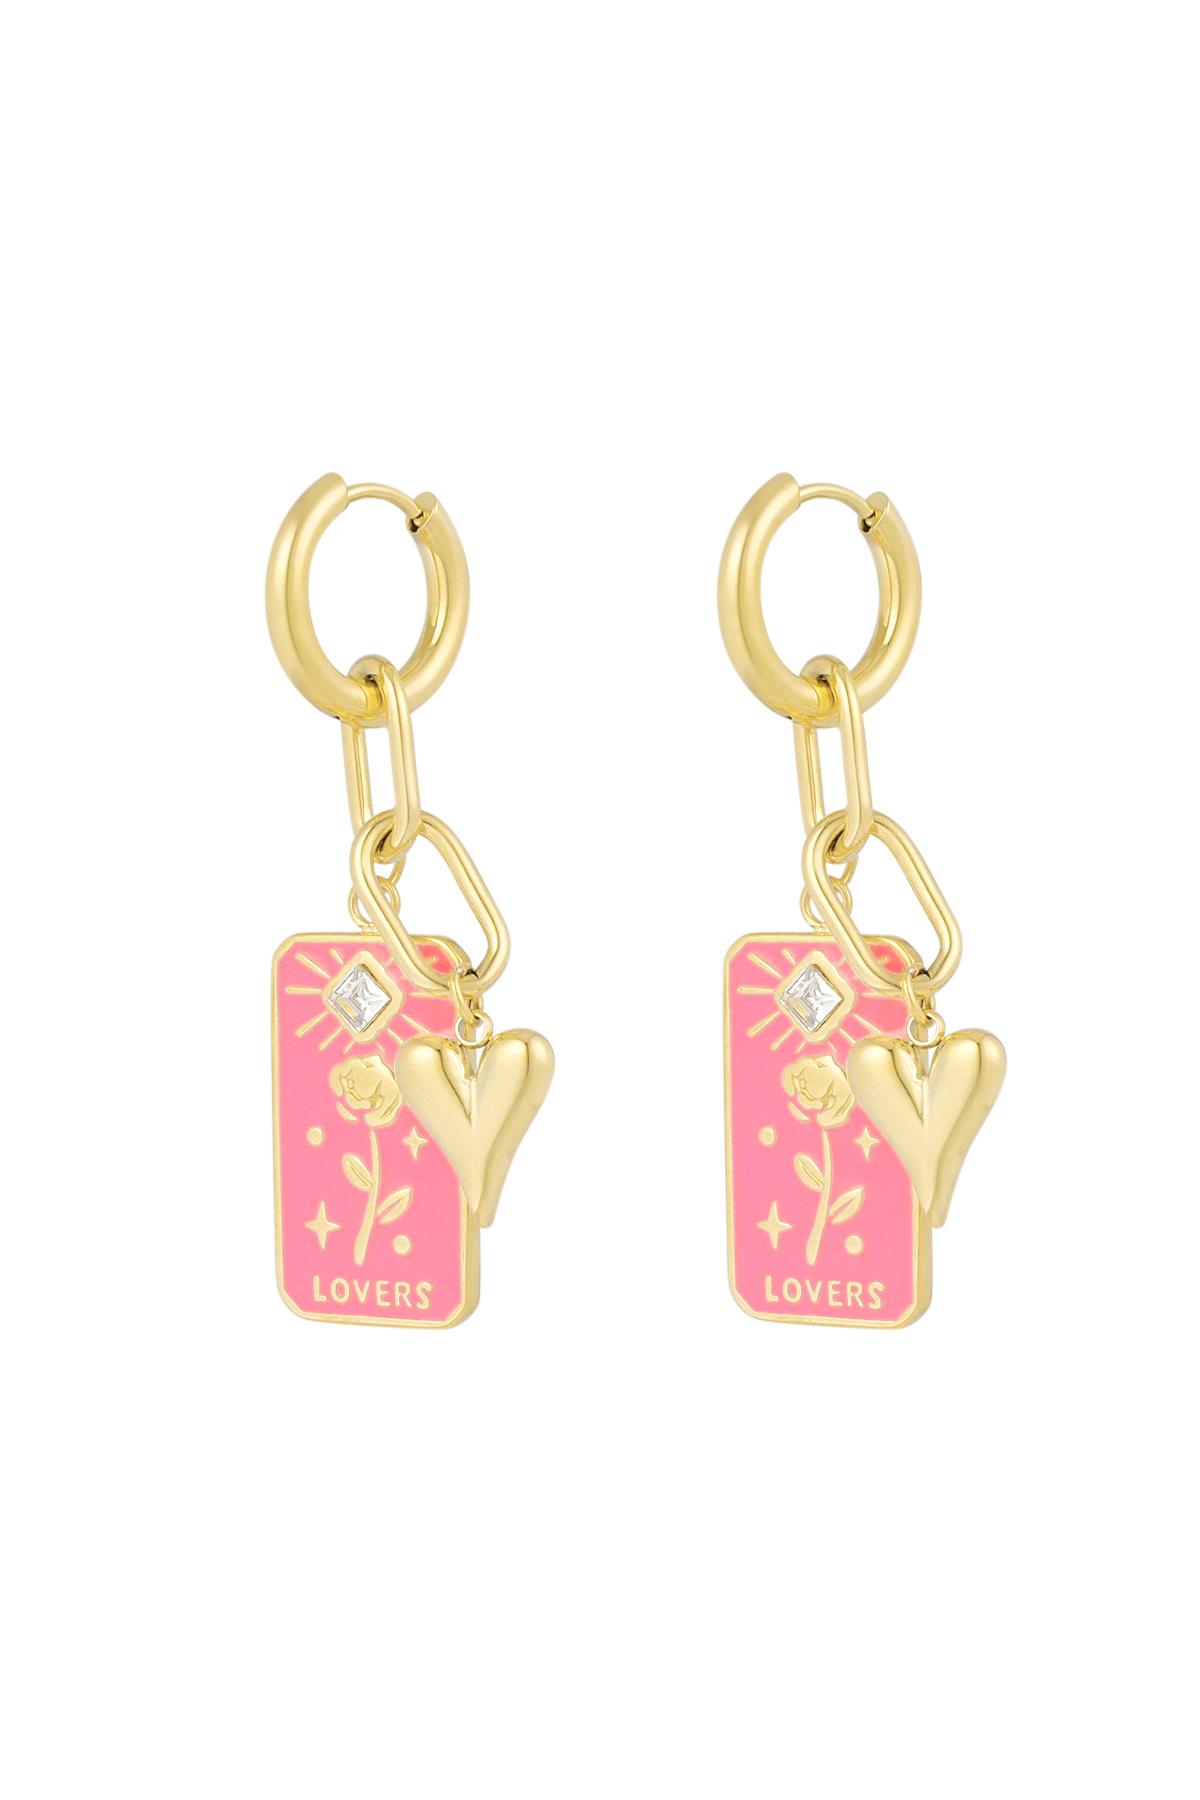 Rose lovers earrings - pink gold